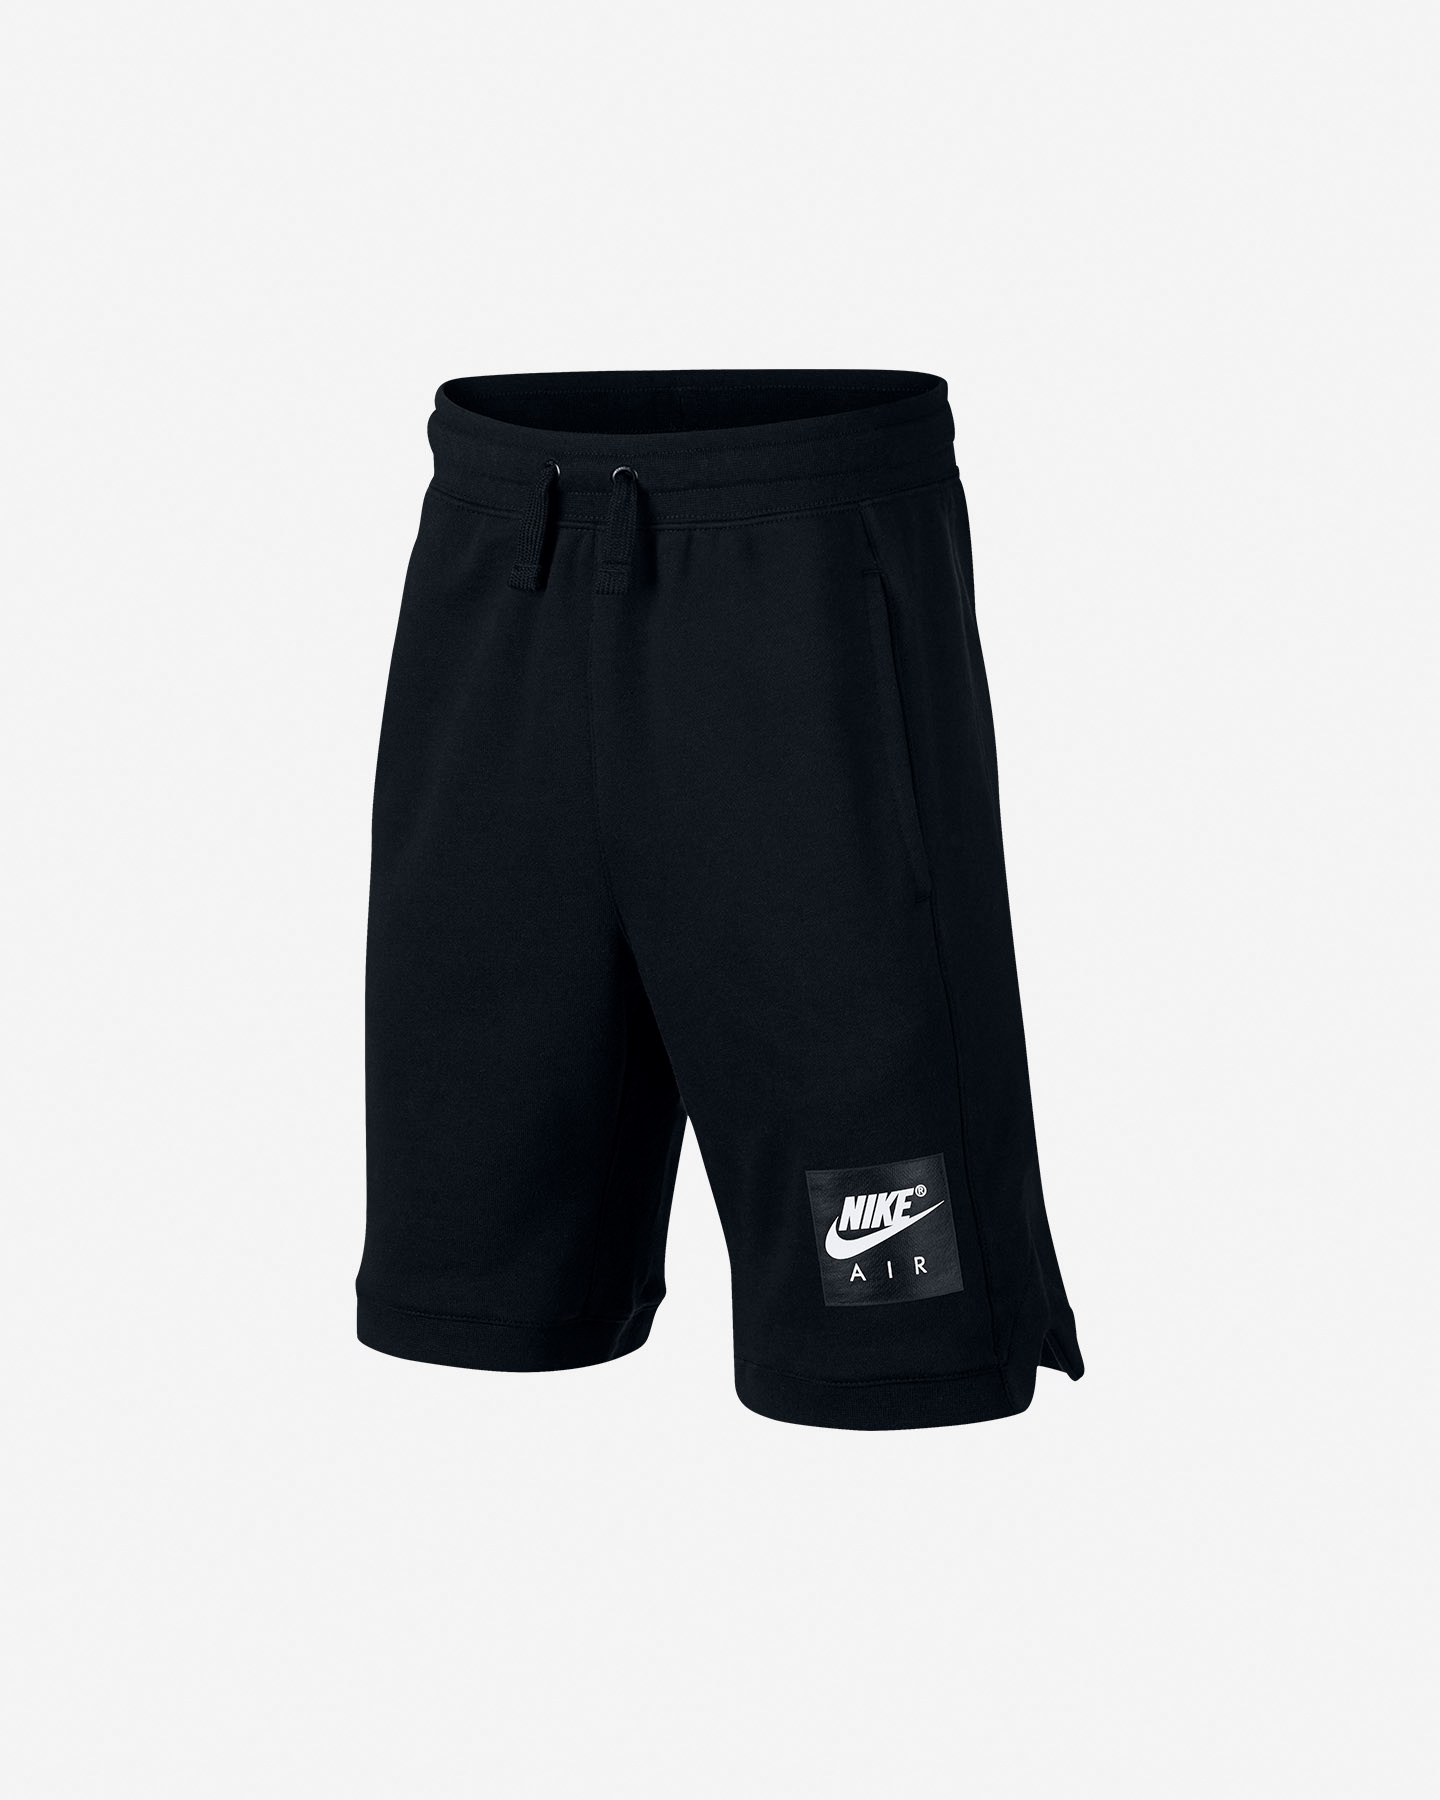 Pantaloncini Nike Fng Air Jr 903659-010 | Cisalfa Sport